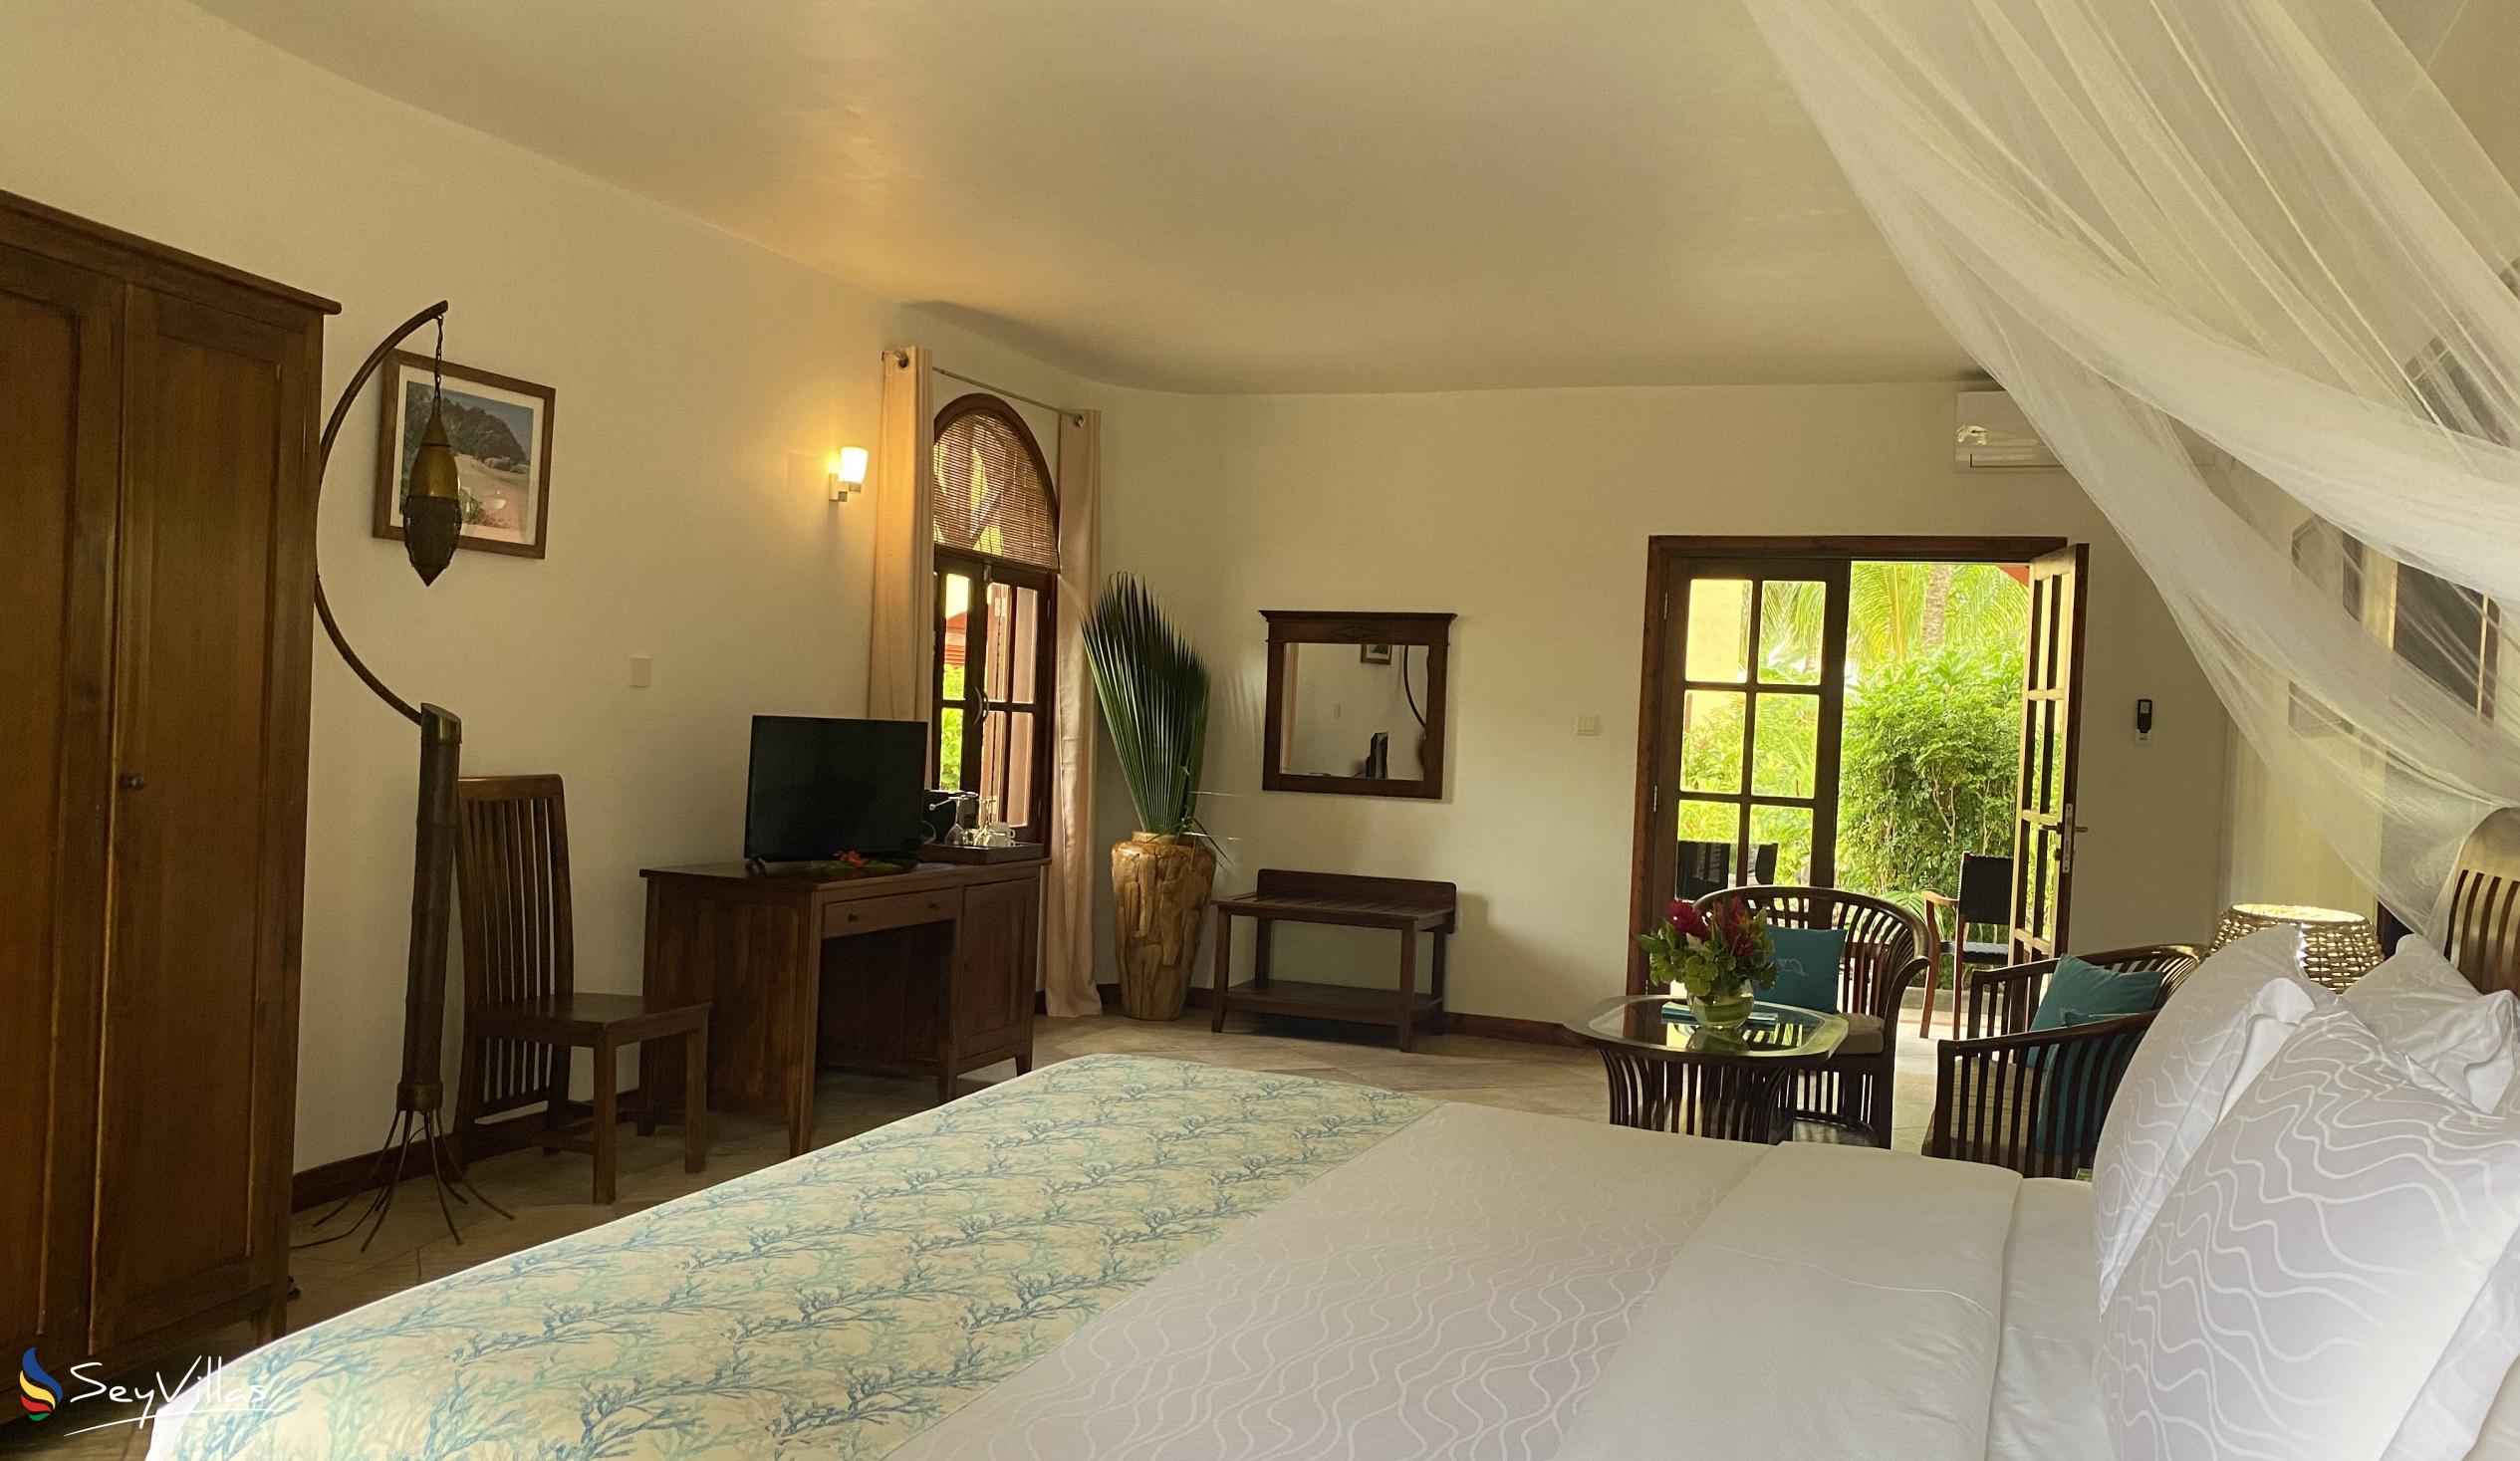 Photo 52: Castello Beach Hotel - Family Suite - Praslin (Seychelles)